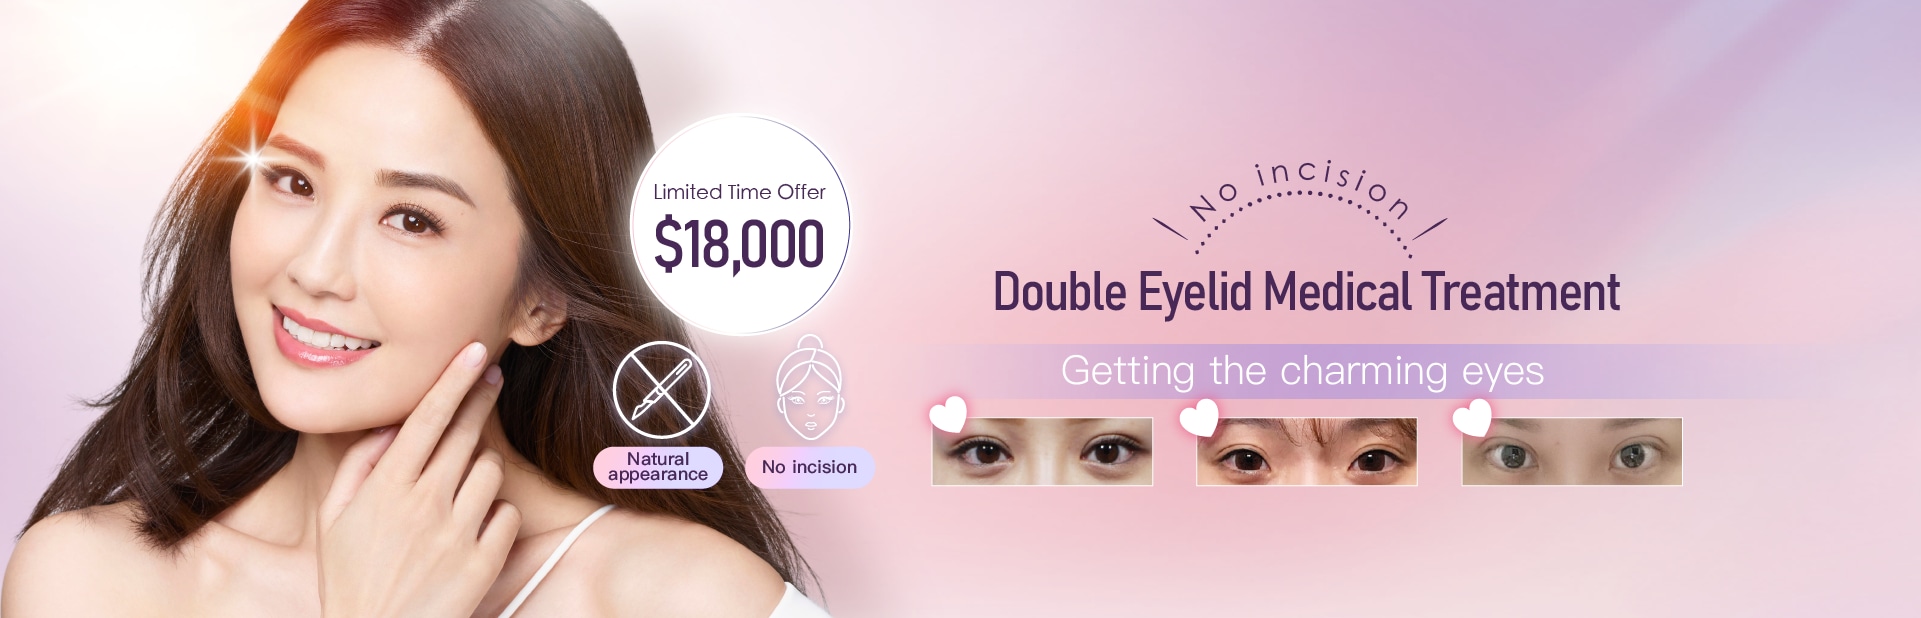 Medical Cosmetic Double Eyelid Treatment